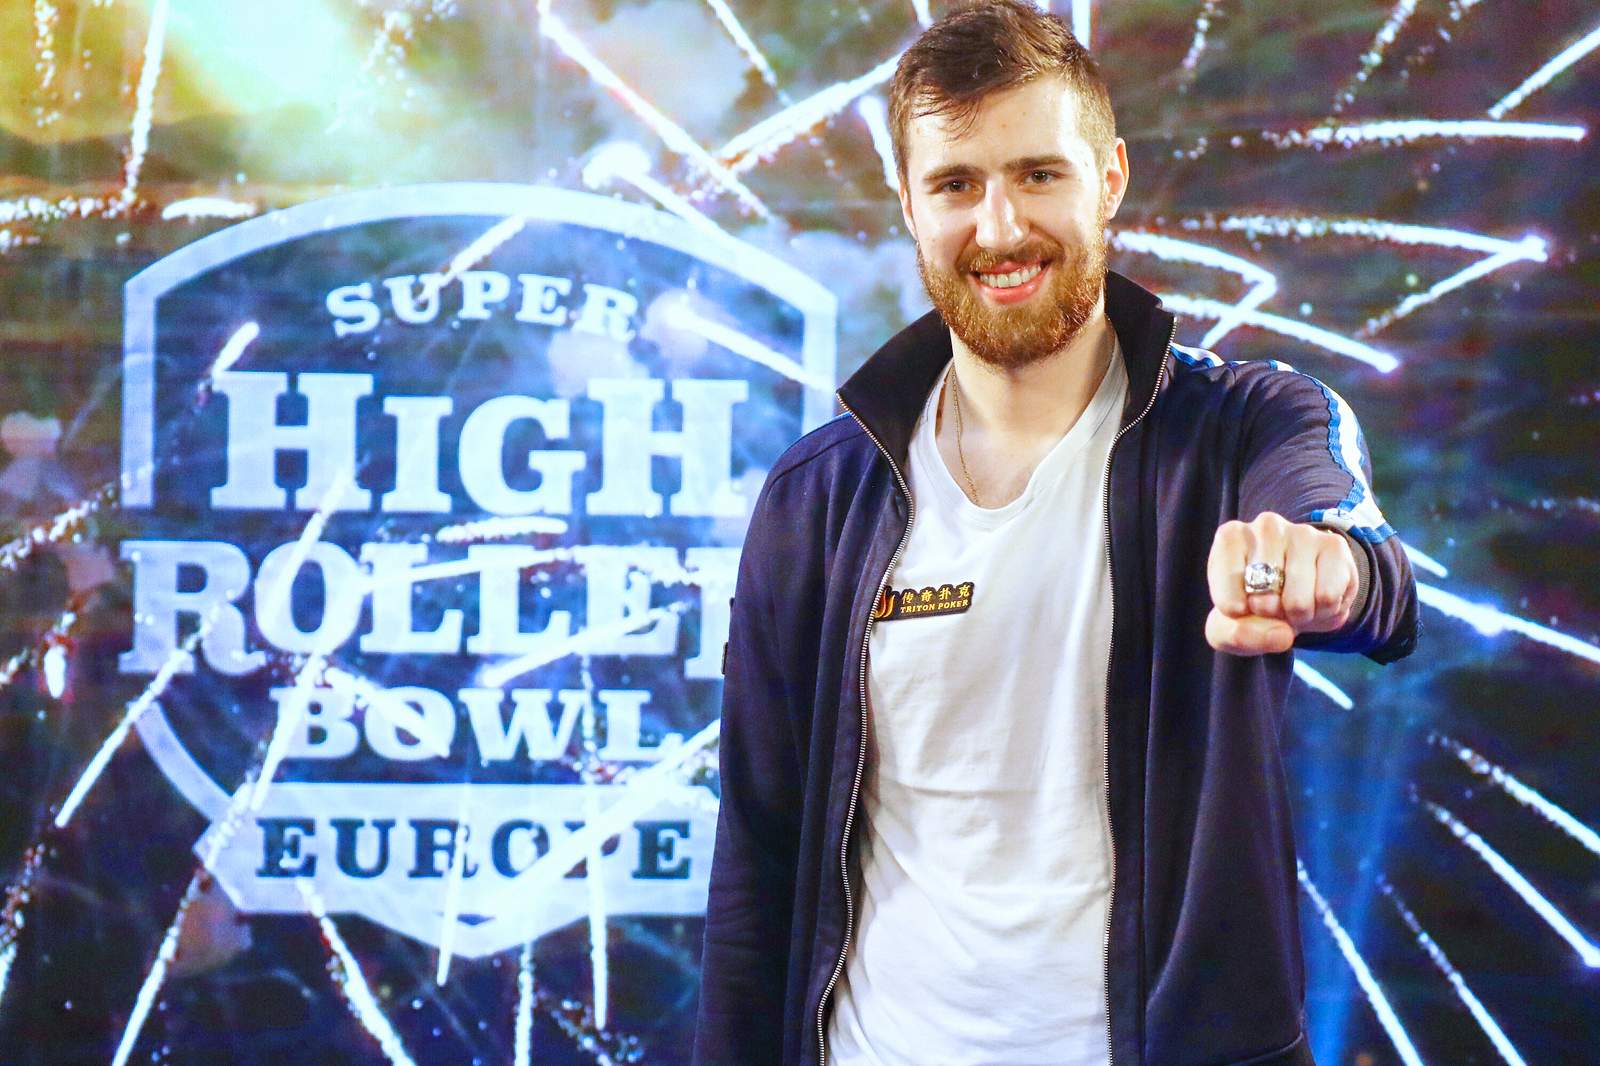 Wiktor Malinowski Wins Super High Roller Bowl Europe for $3,690,000